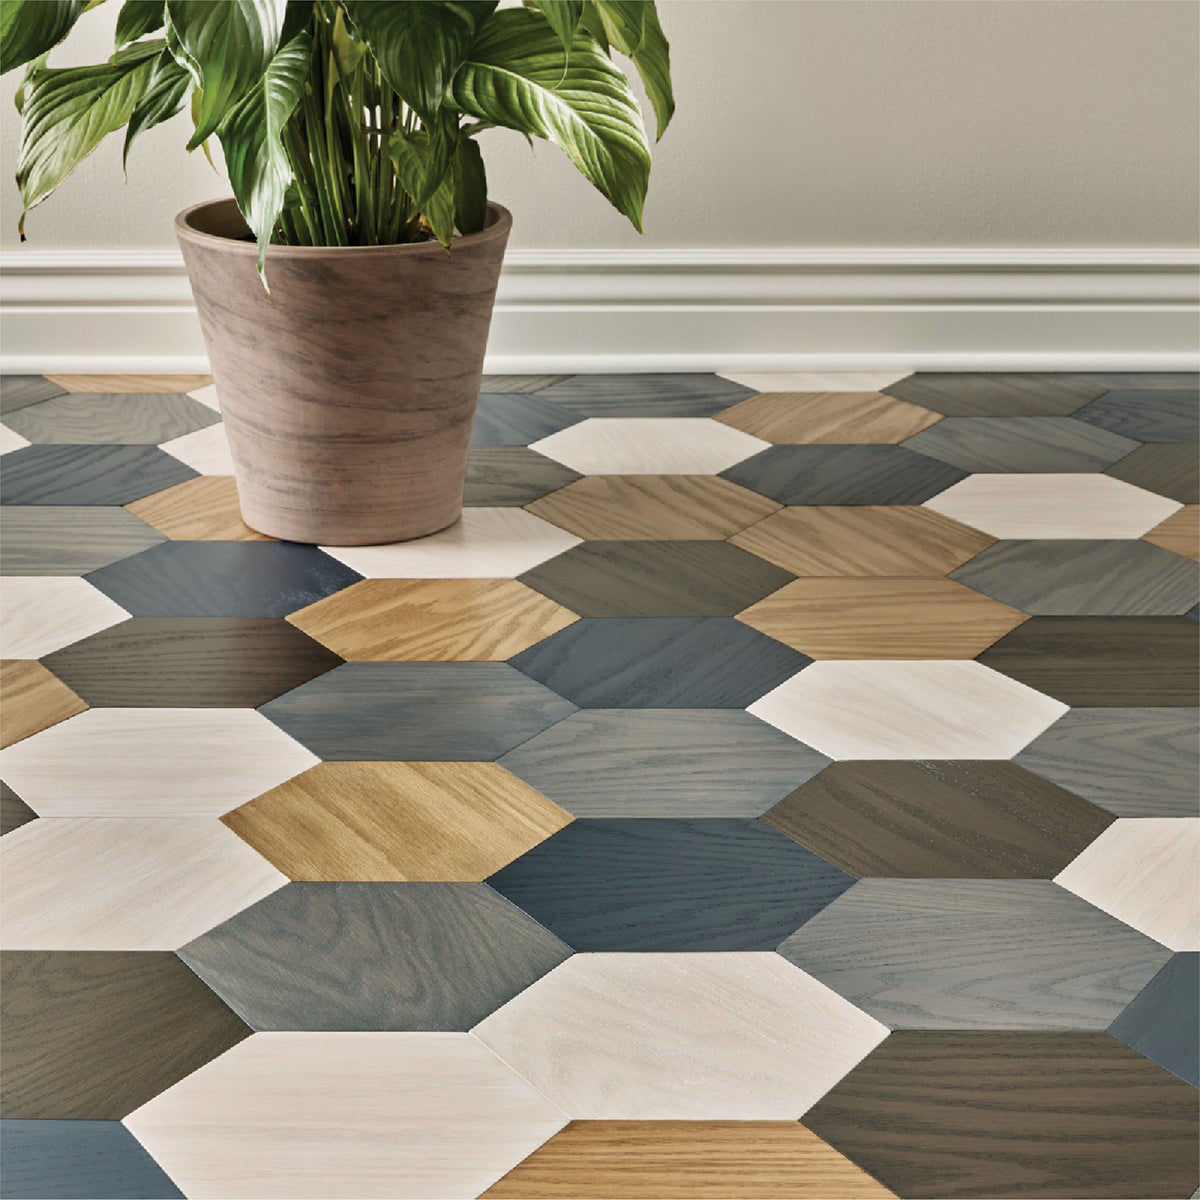 Maine Wood Floors - Fabulon Polyeurethane floor finish is a super